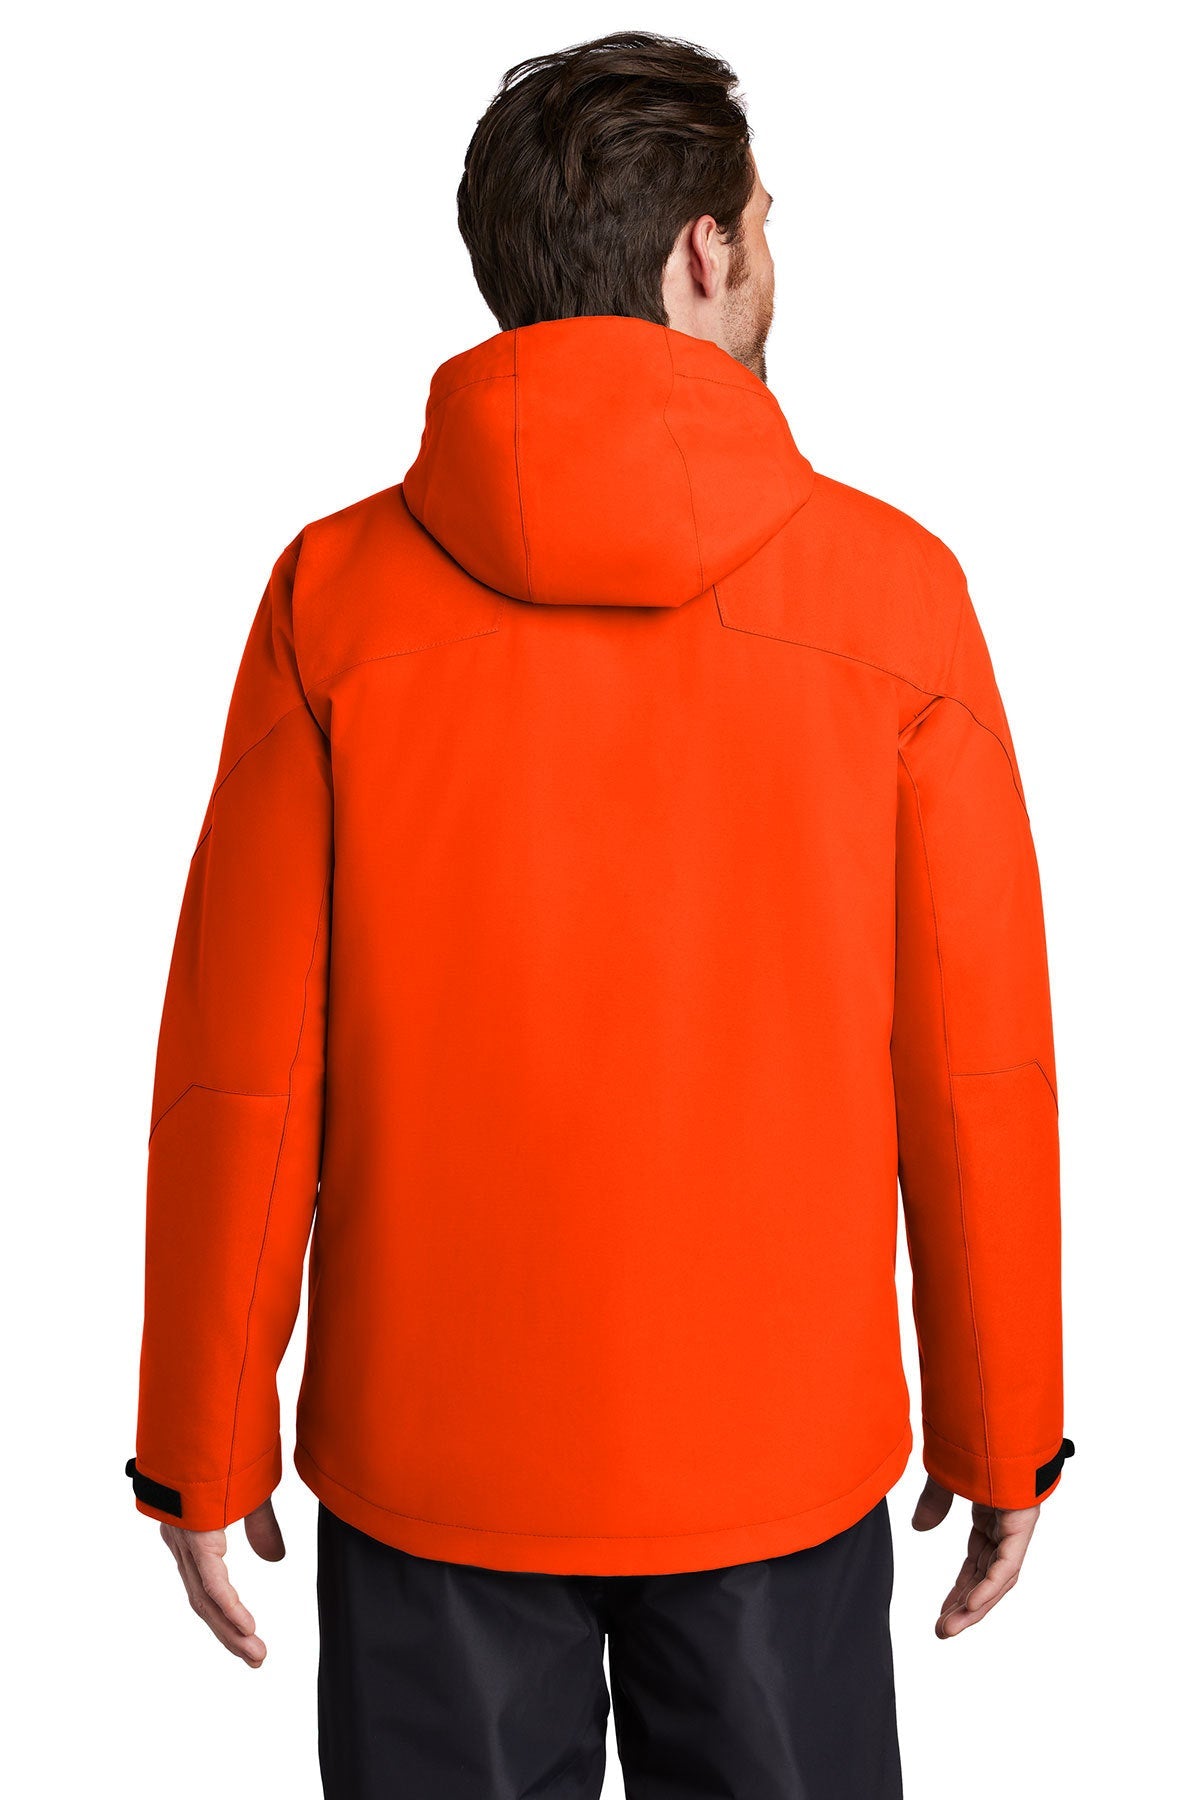 port authority_j405 _fire orange_company_logo_jackets